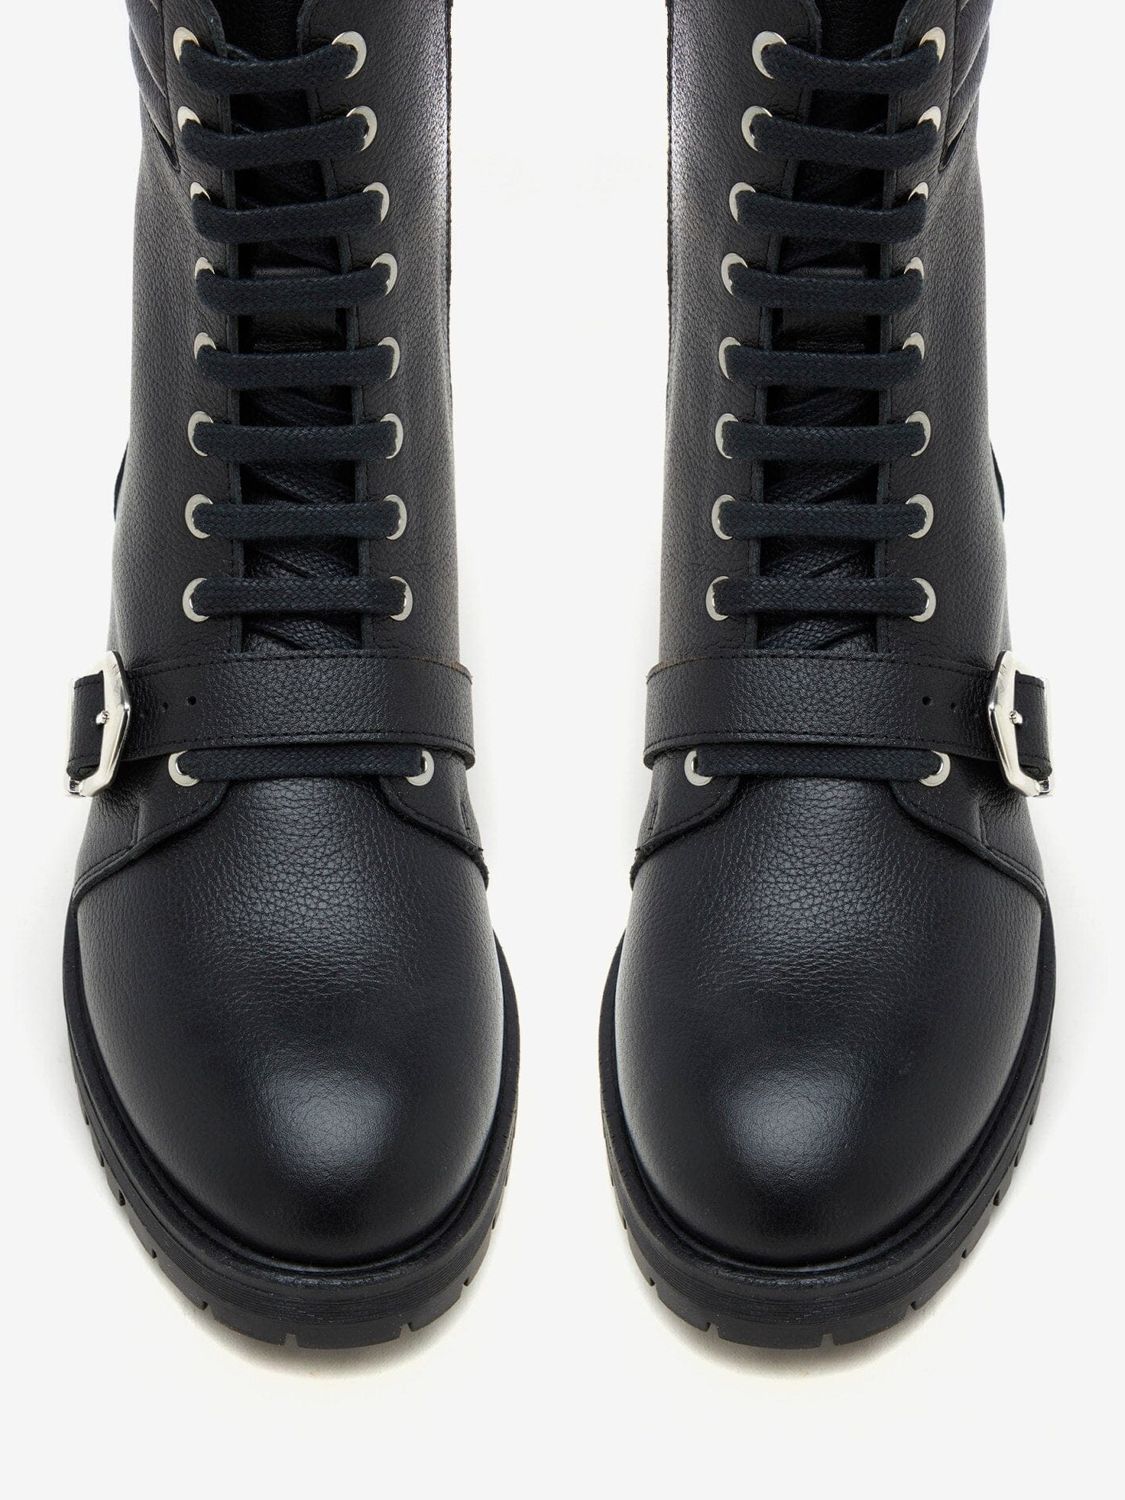 Mint Velvet Leather Biker Boots, Black at John Lewis & Partners